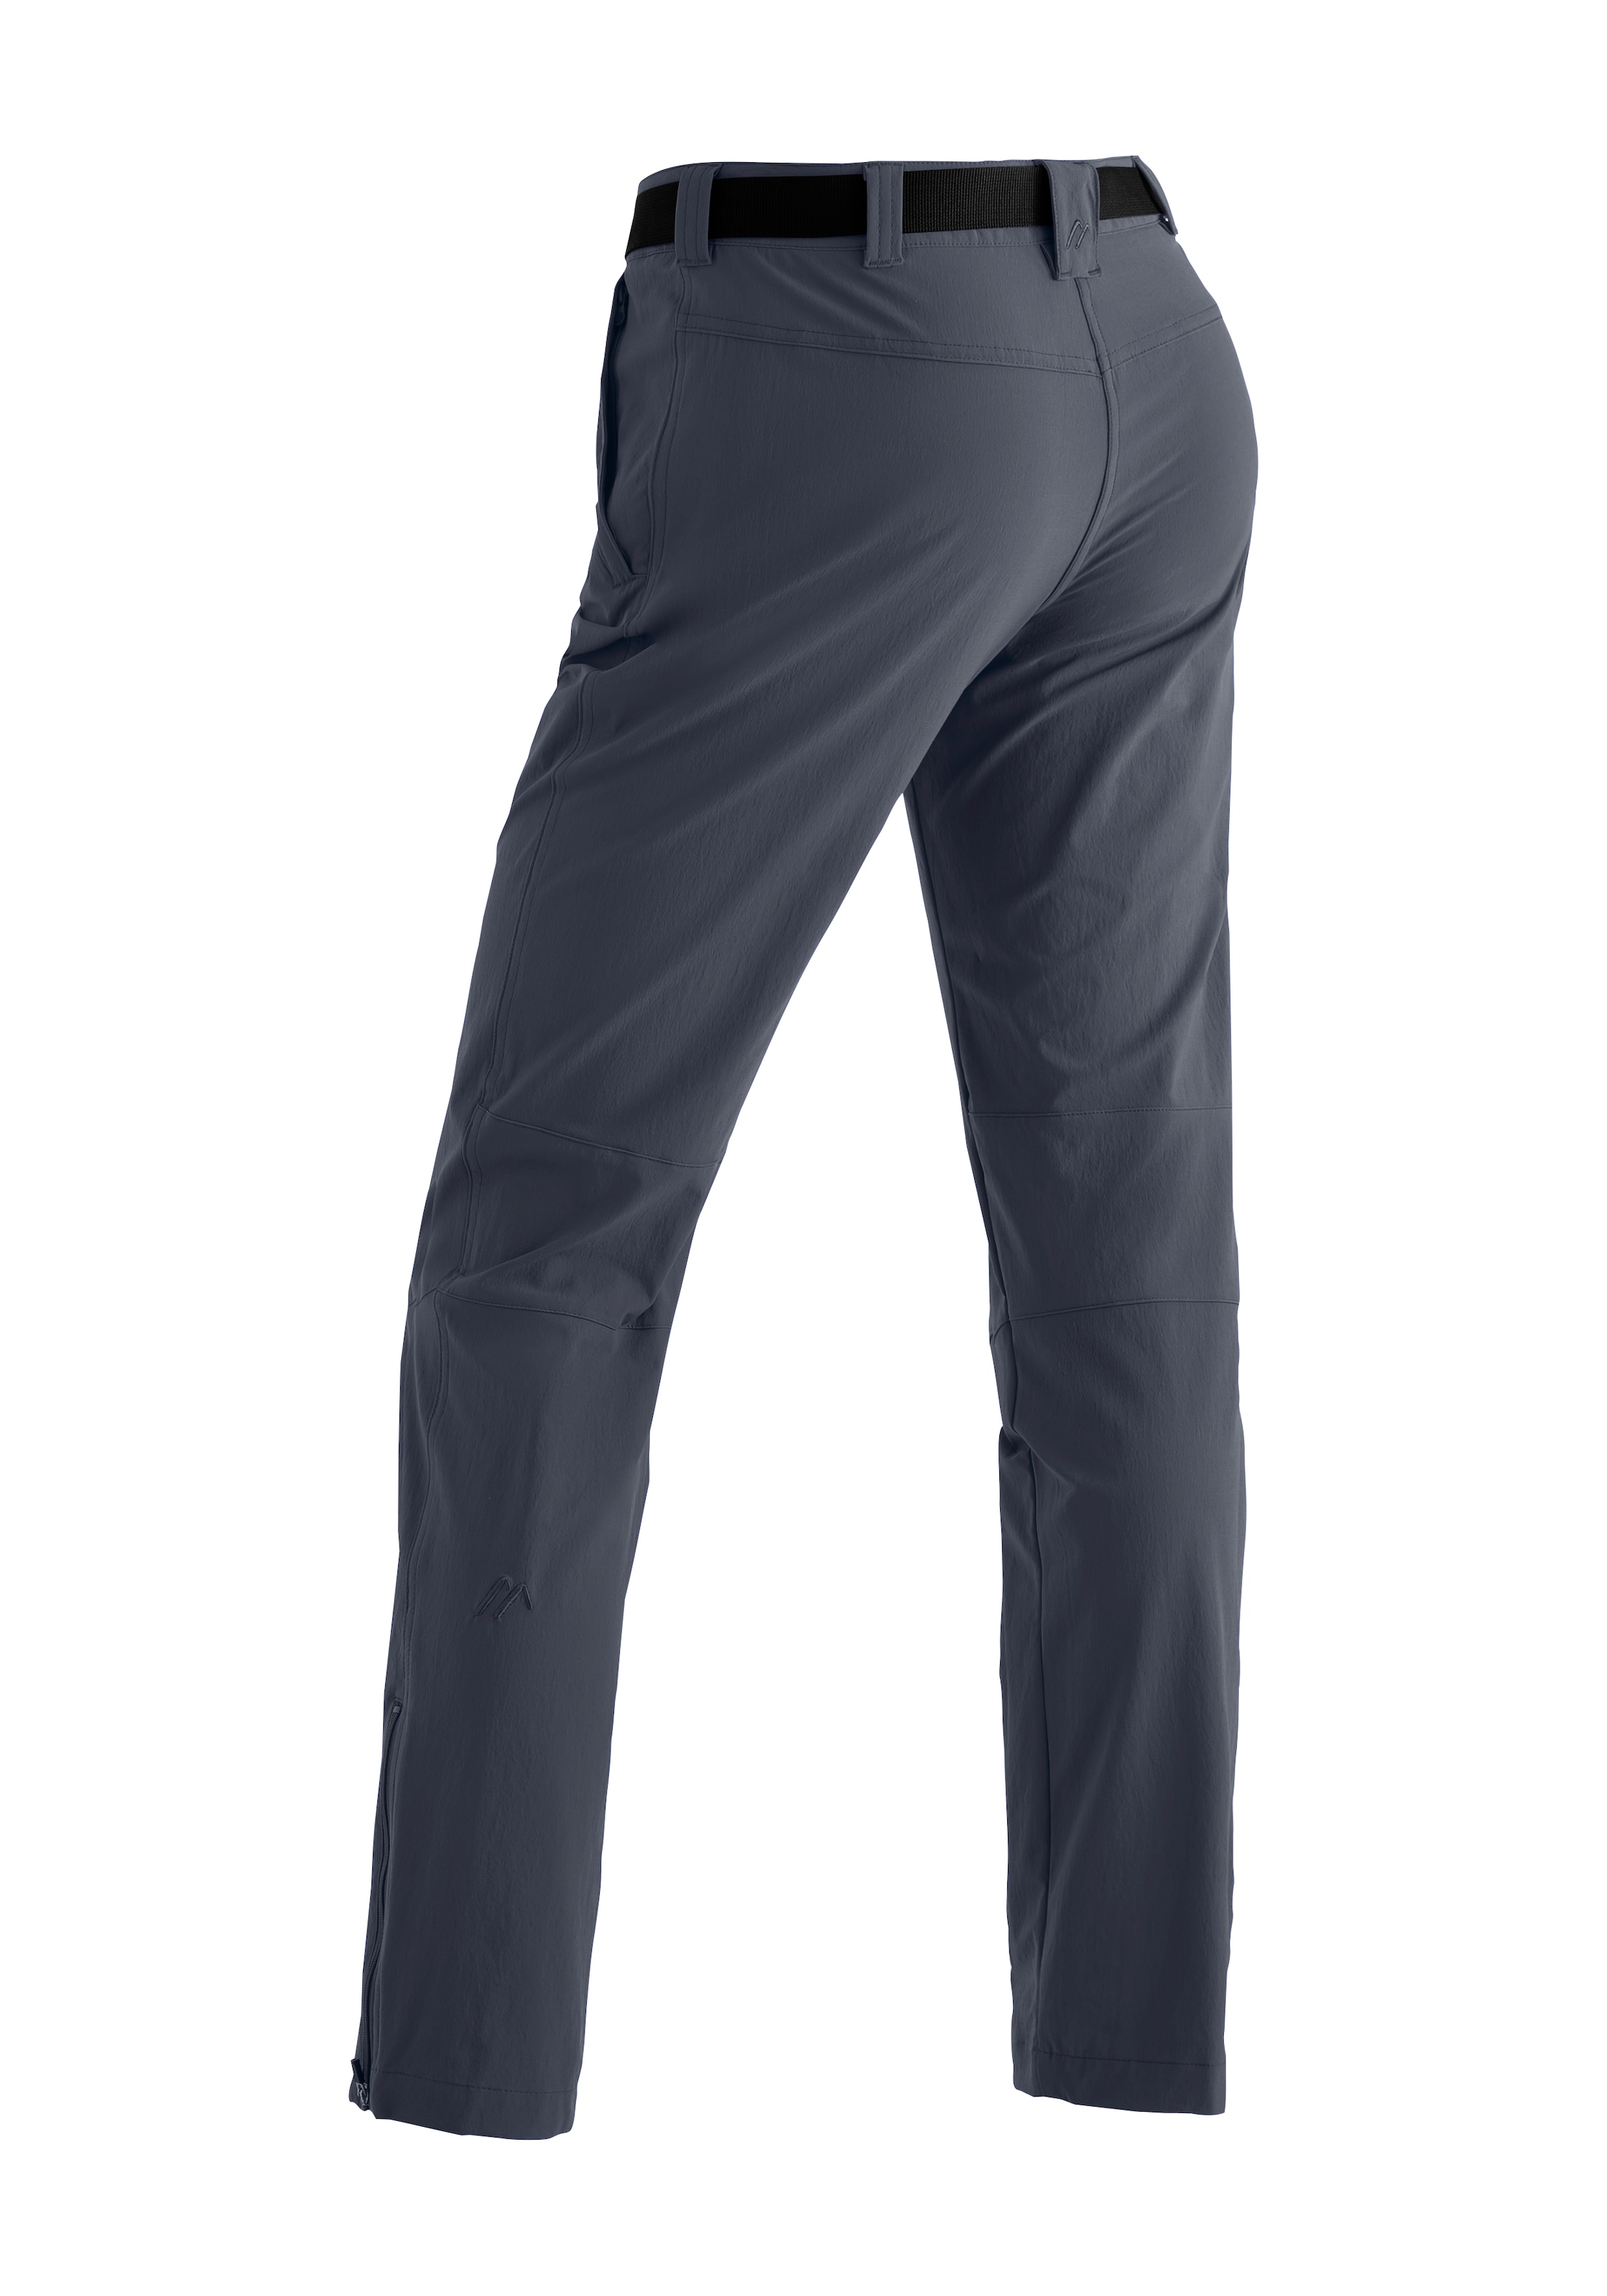 Maier Sports Funktionshose »Inara slim«, Damen Wanderhose, Outdoor-Hose aus elastischem Material